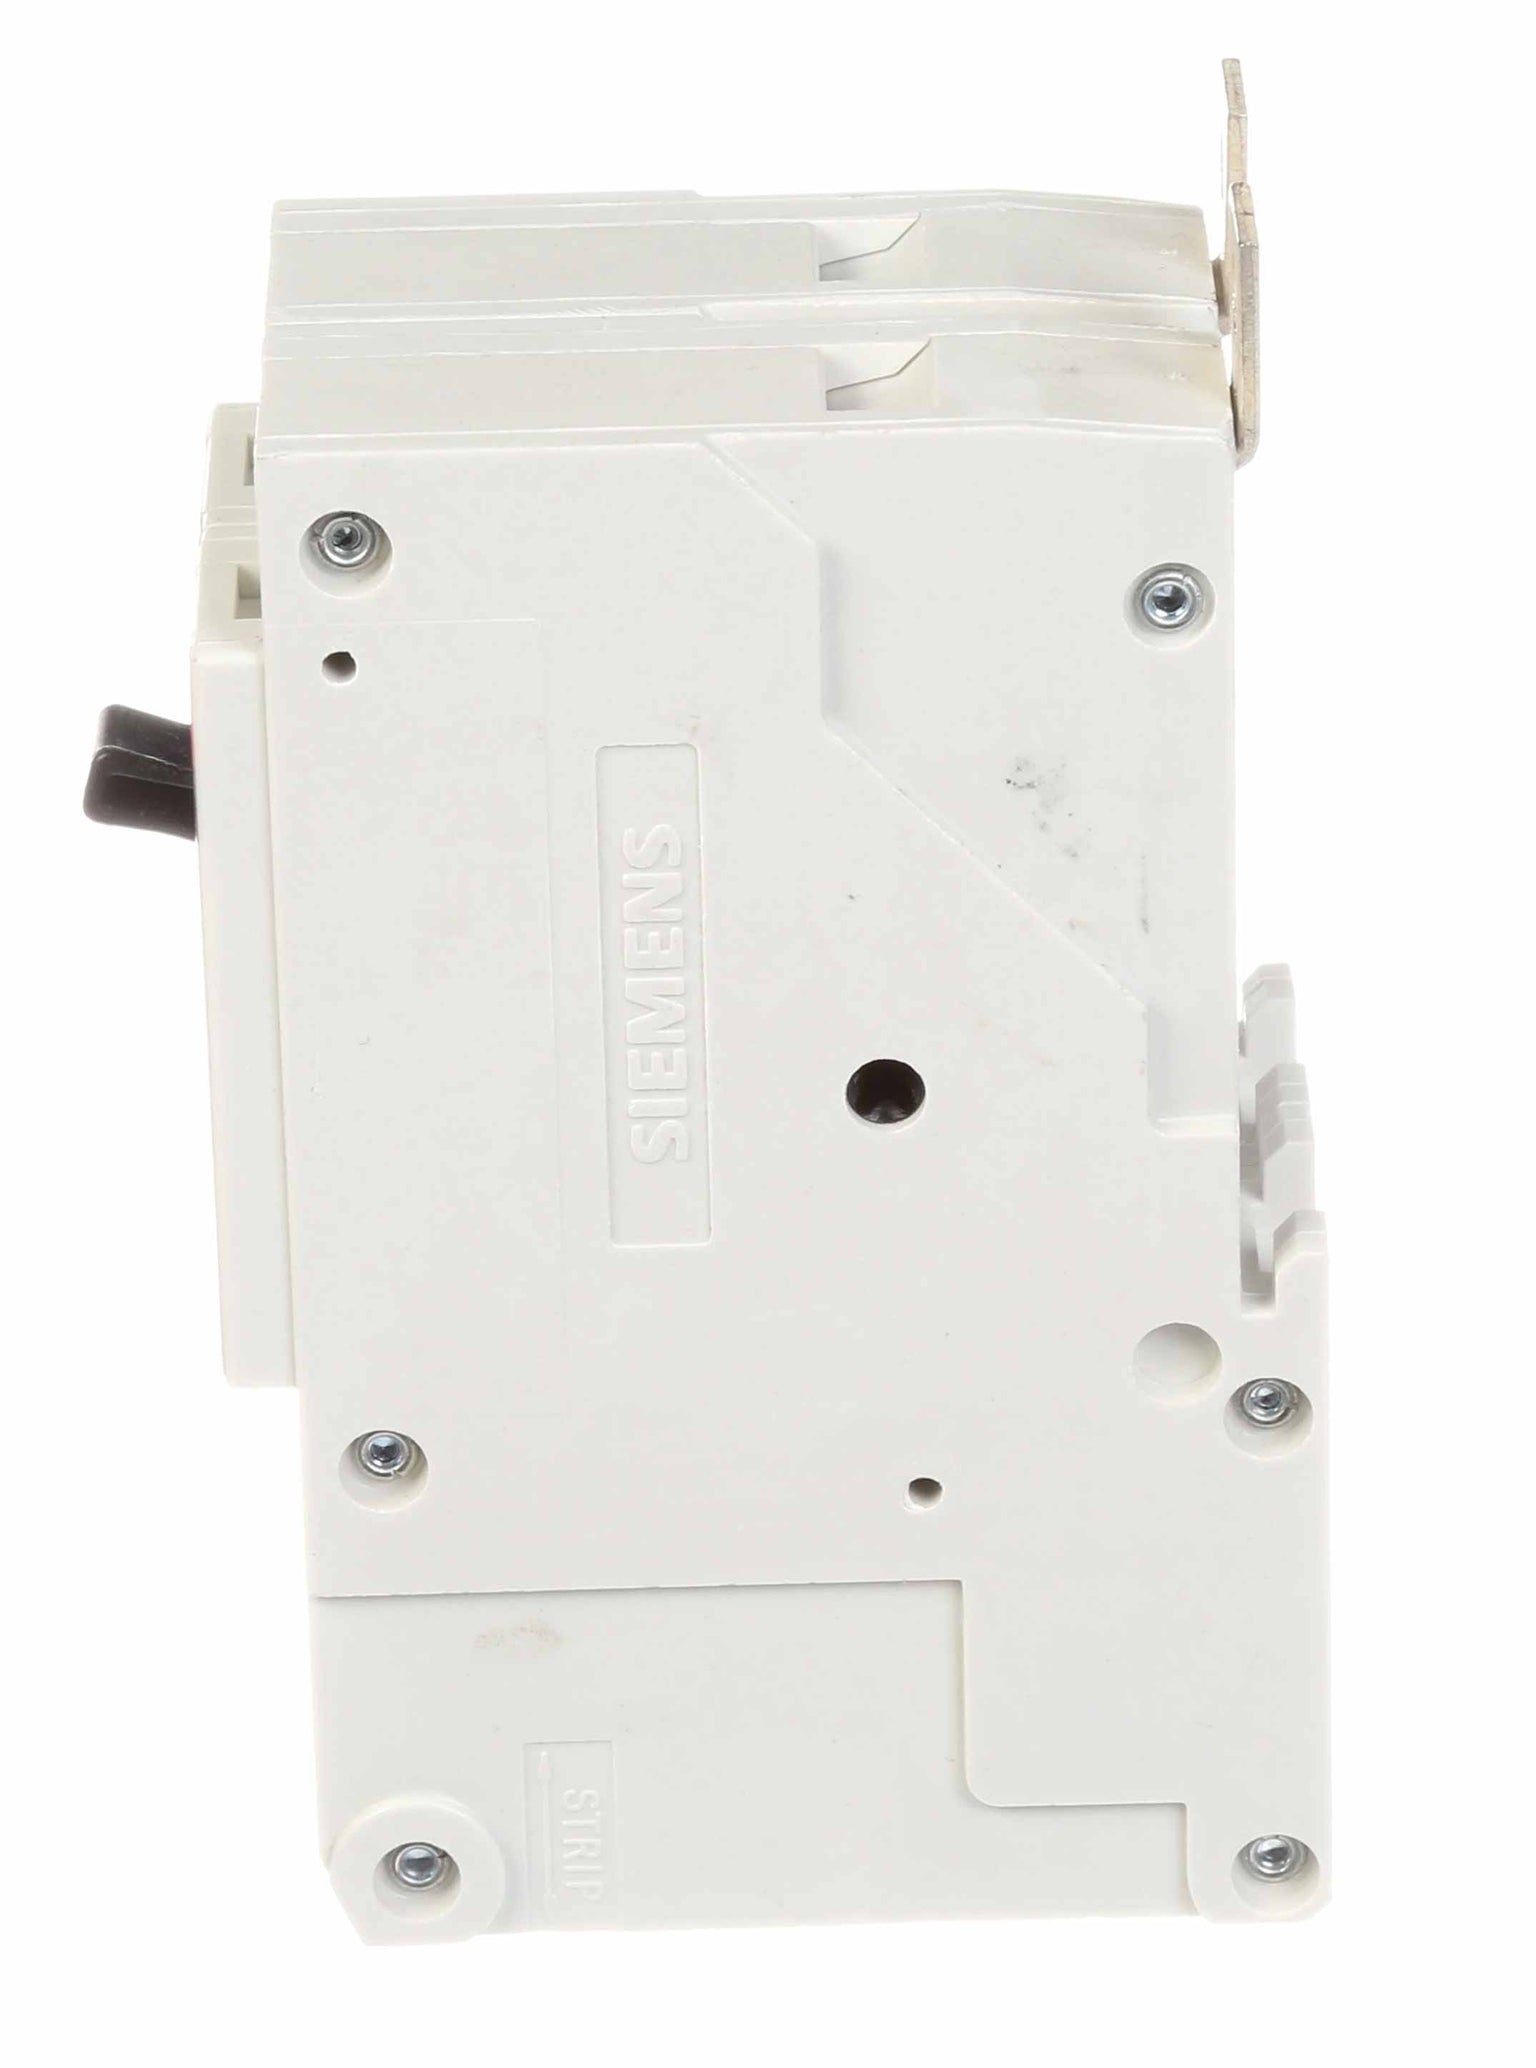 LGB2B125B - Siemens - Molded Case Circuit Breaker